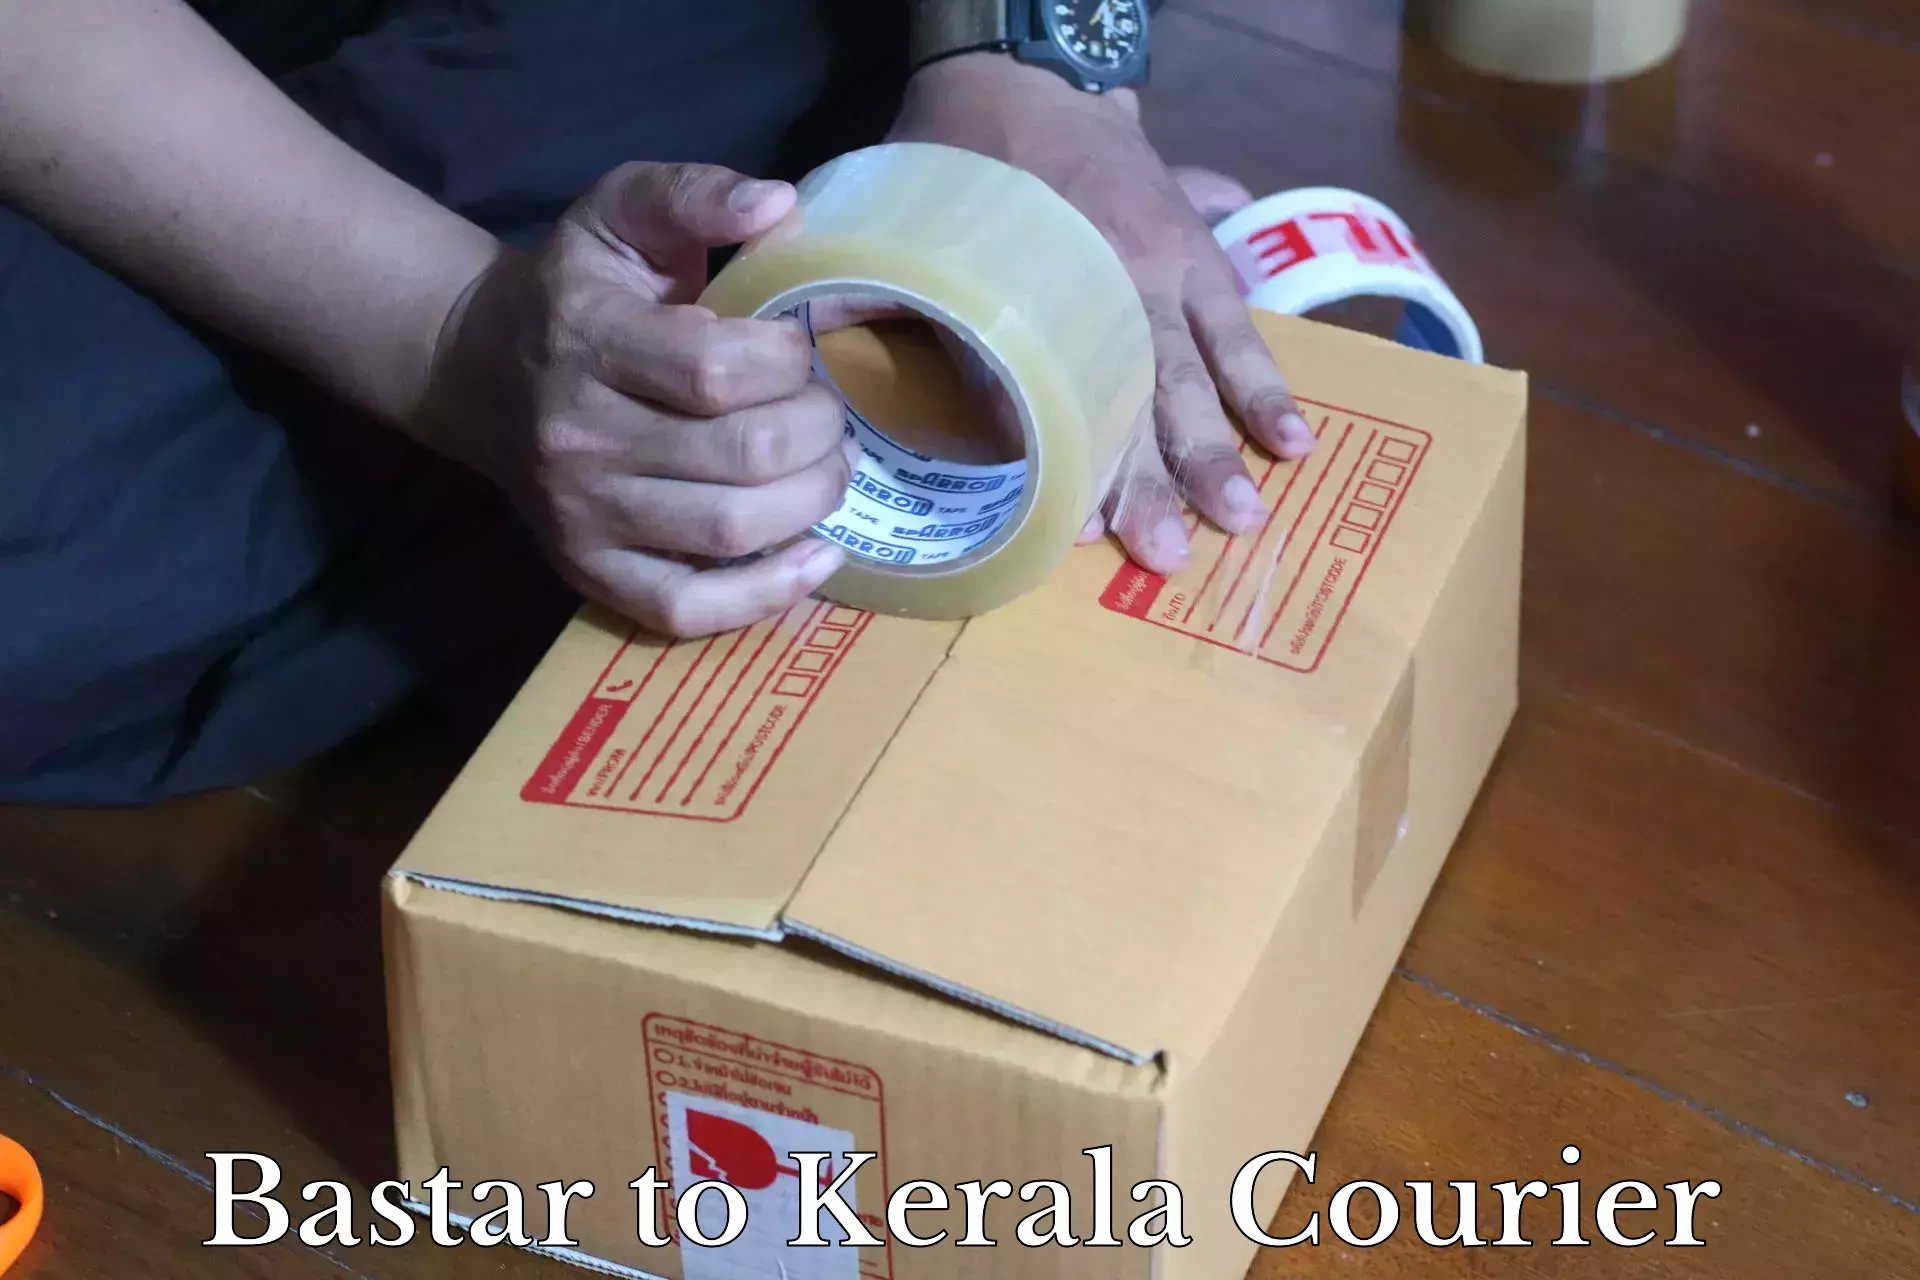 Bulk shipping discounts Bastar to Kerala